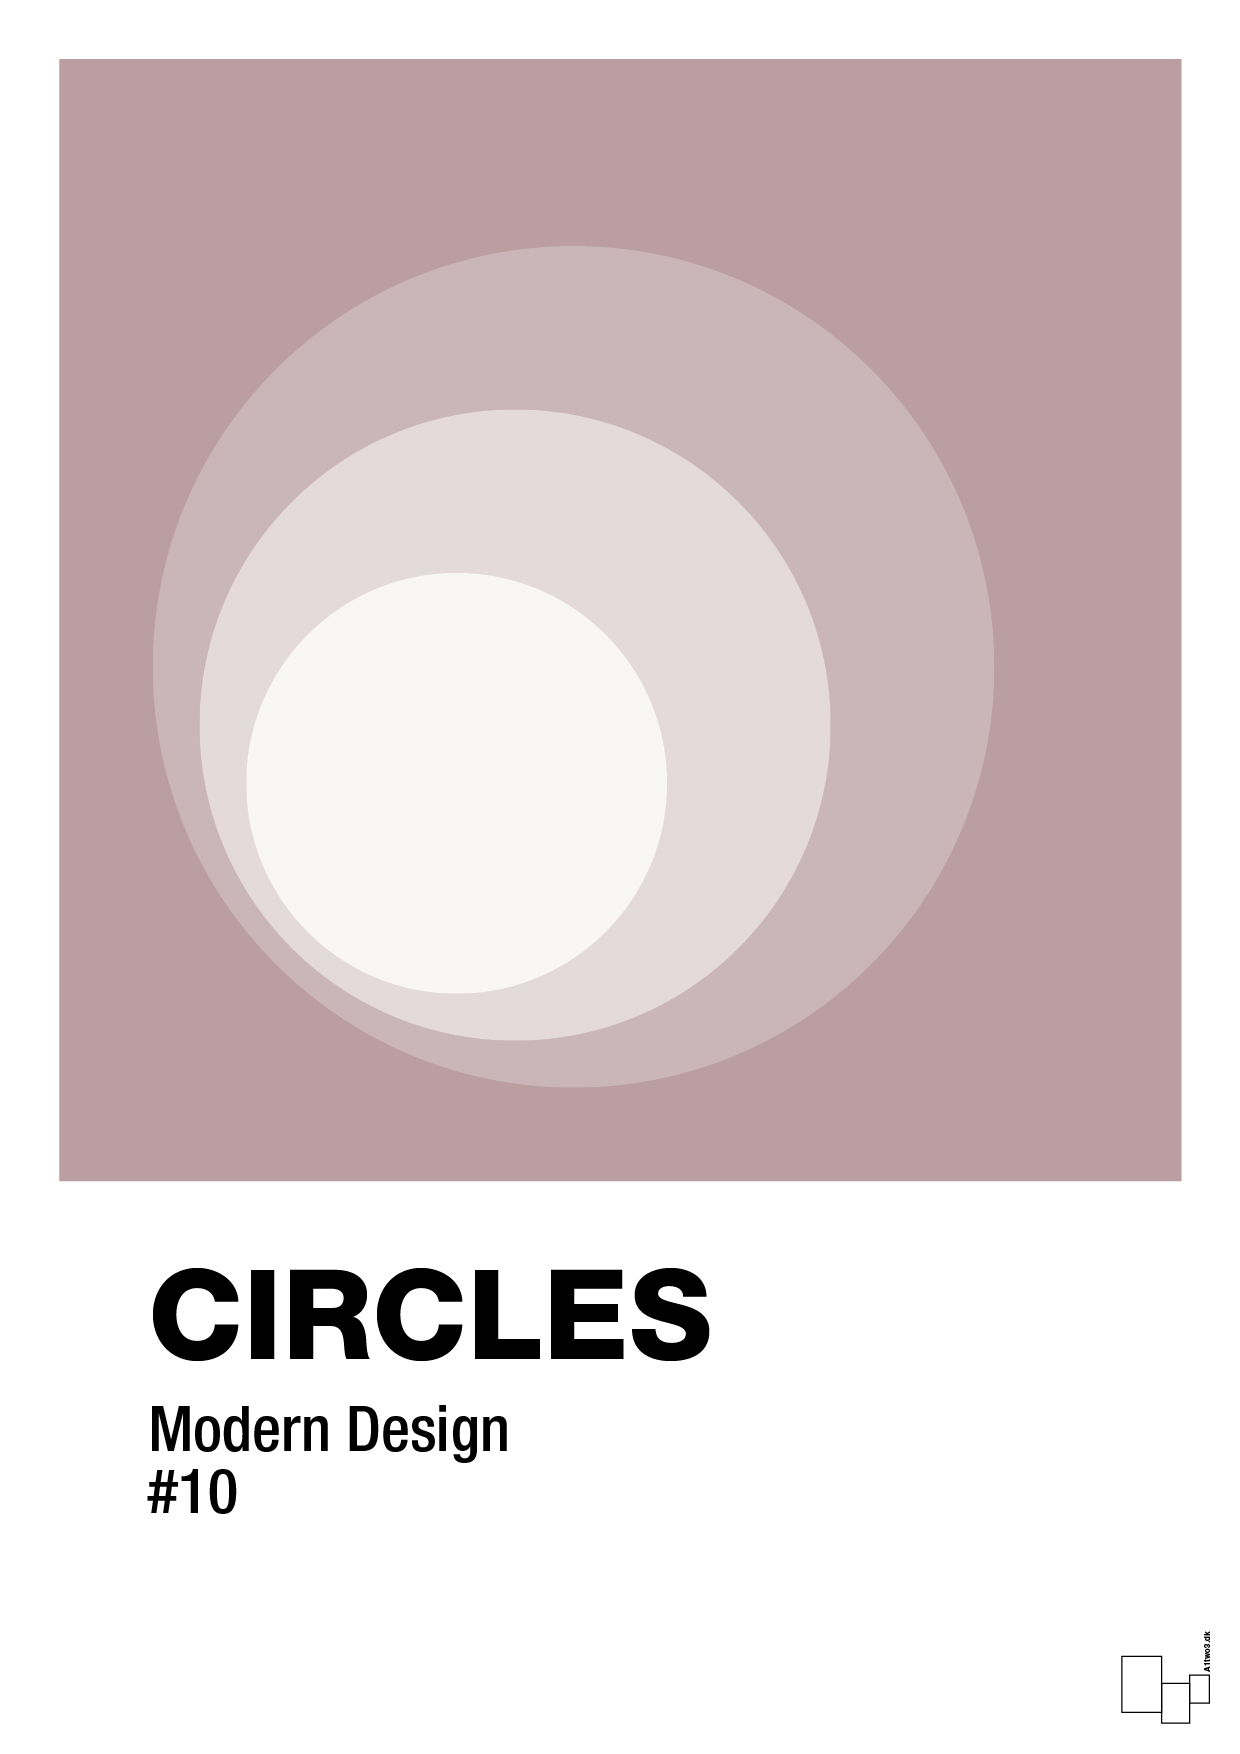 circles #10 - Plakat med Grafik i Light Rose